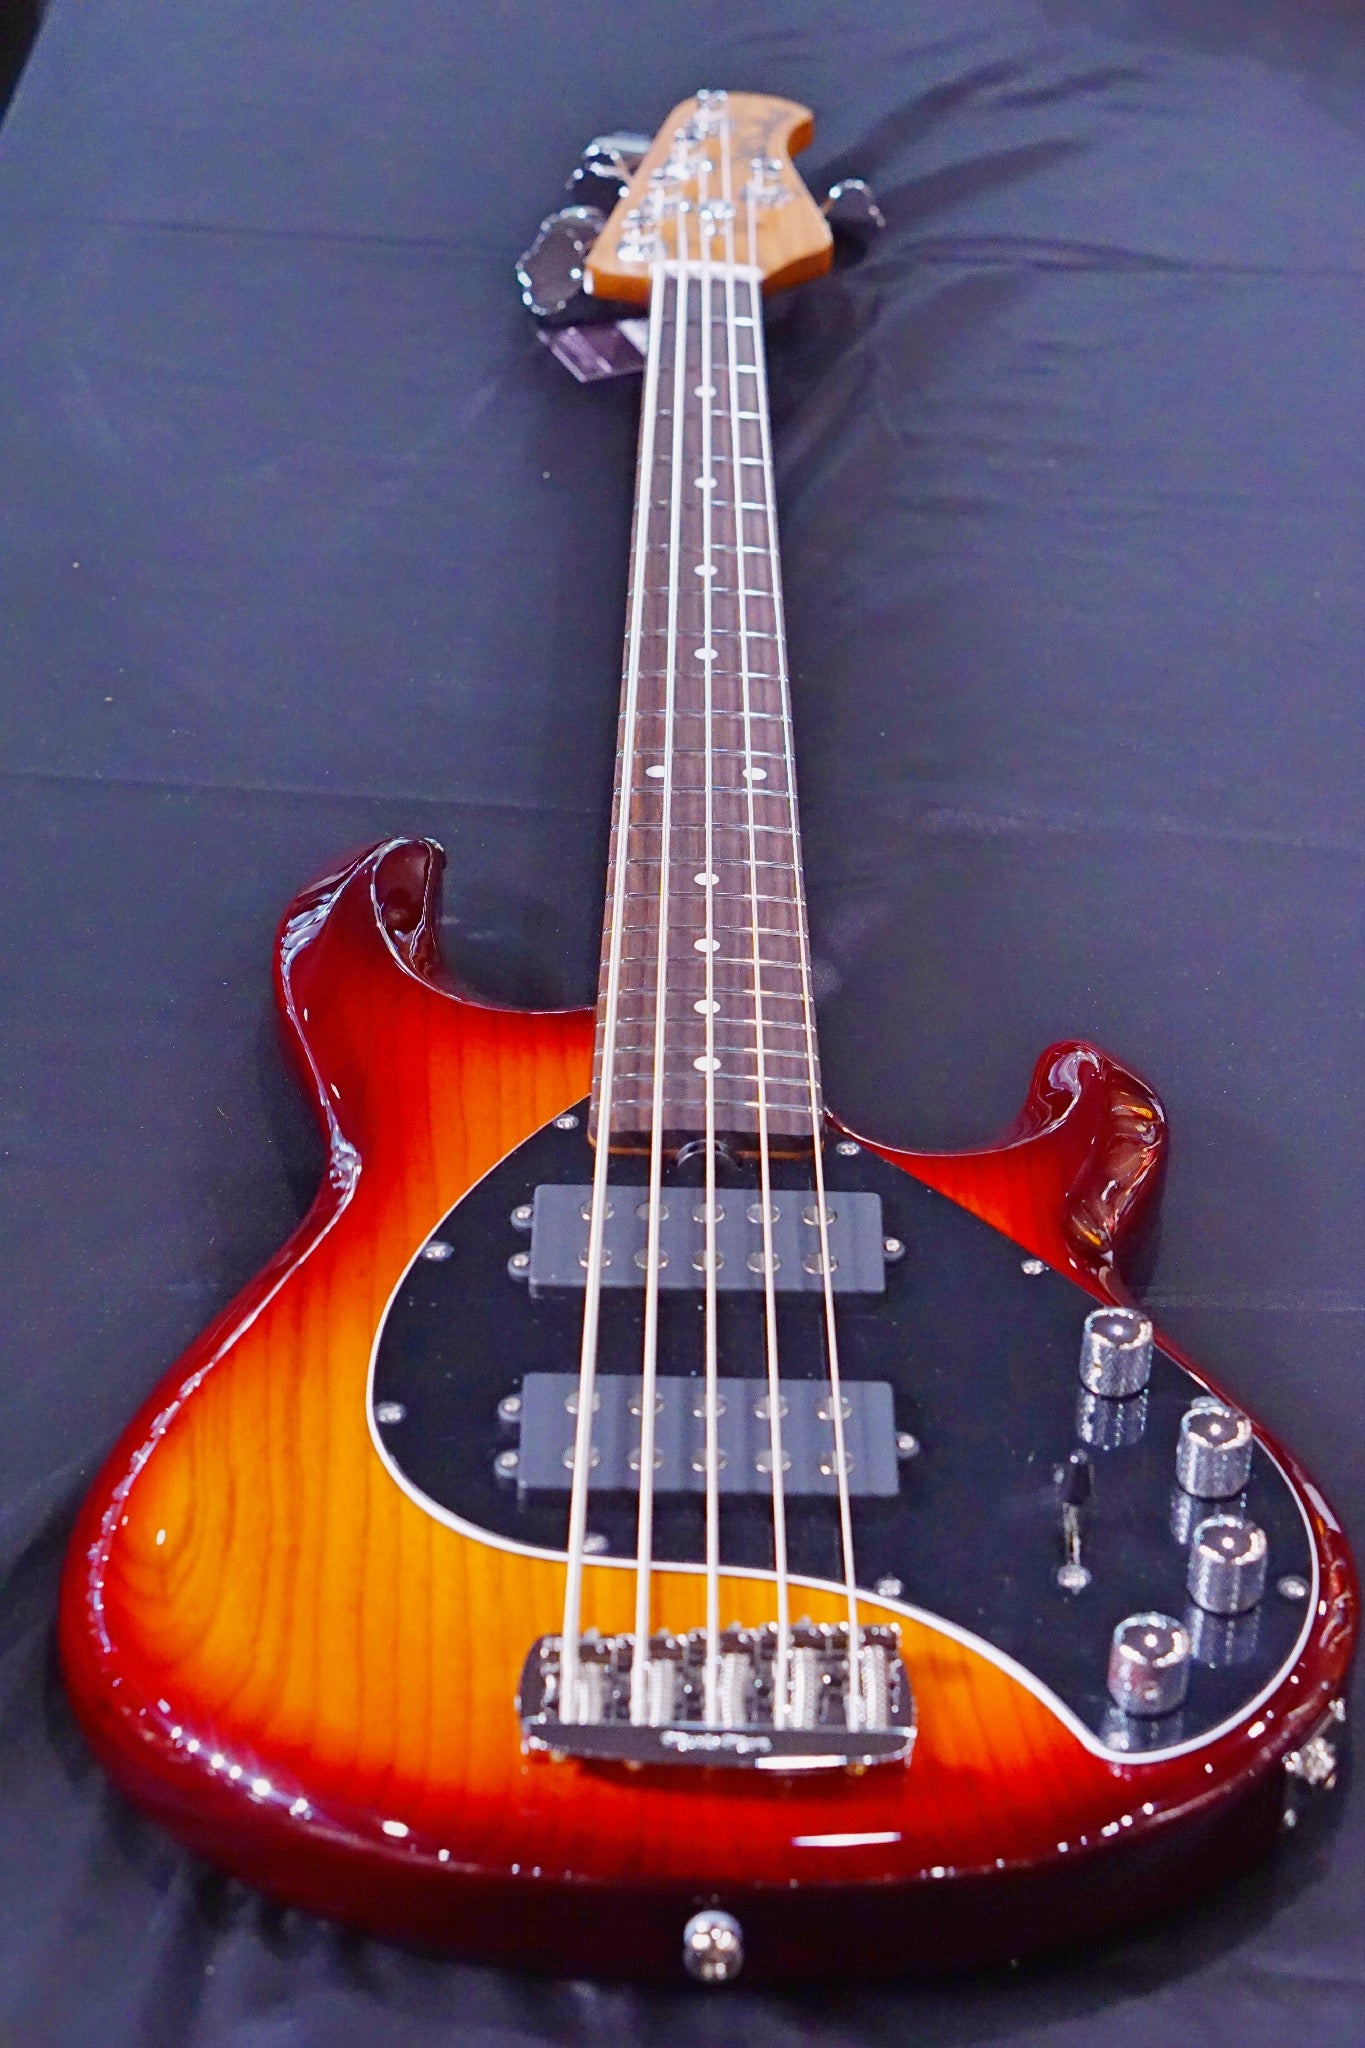 Ernie Ball Music Man StingRay 5 Special HH Bass Guitar - Burnt Amber with Maple Fingerboard F83624 - HIENDGUITAR   Musicman bass